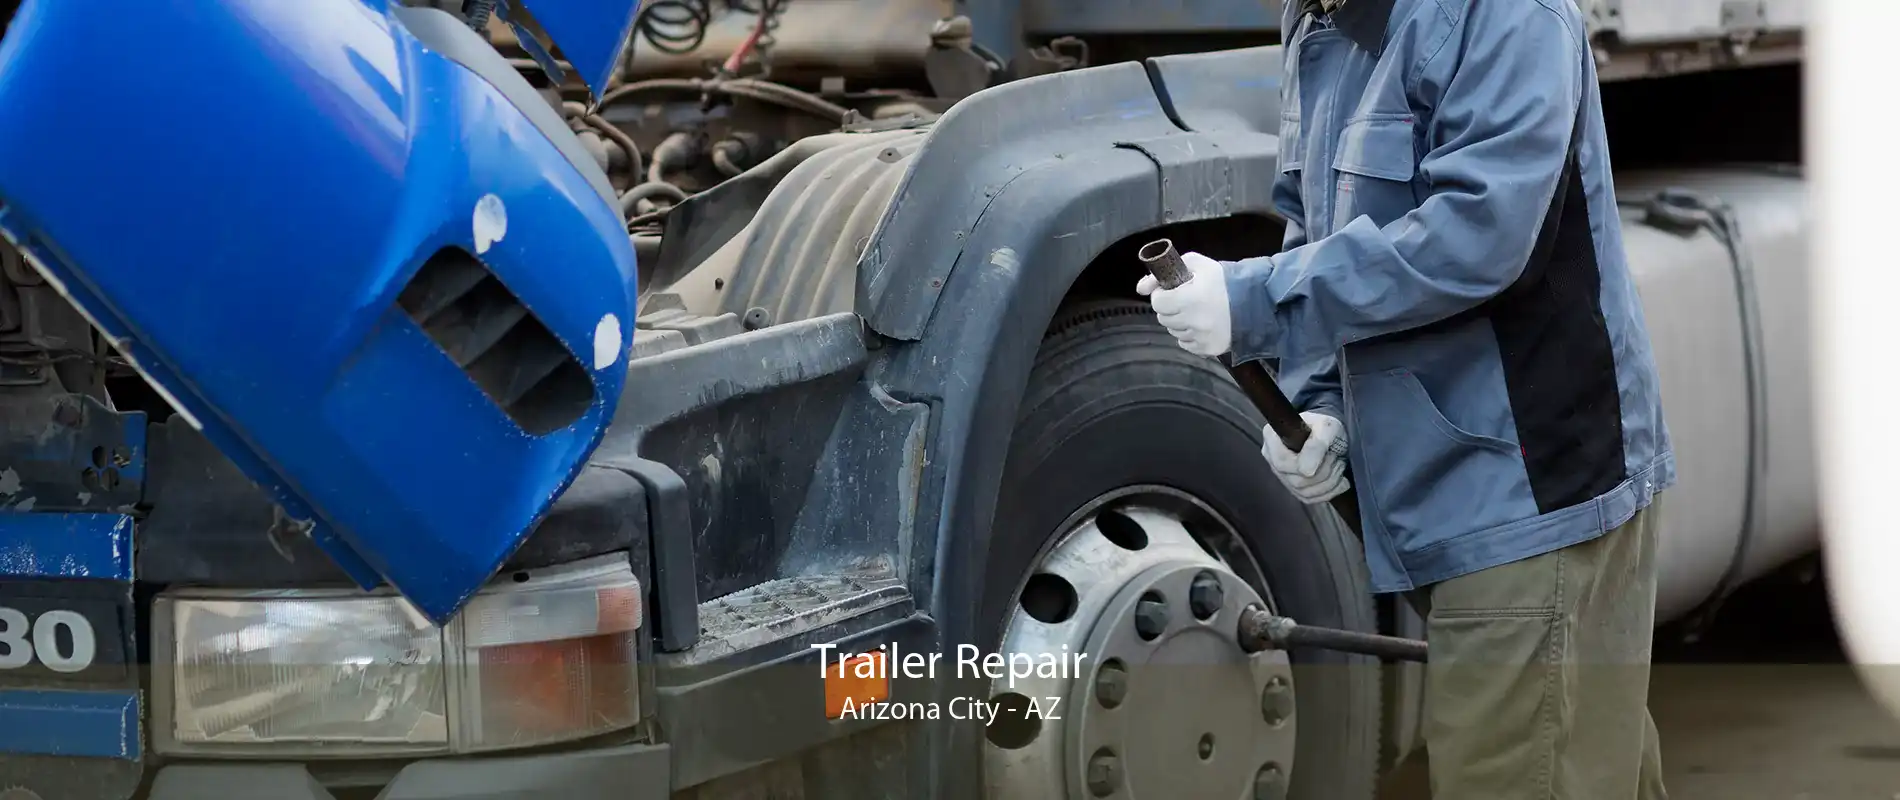 Trailer Repair Arizona City - AZ